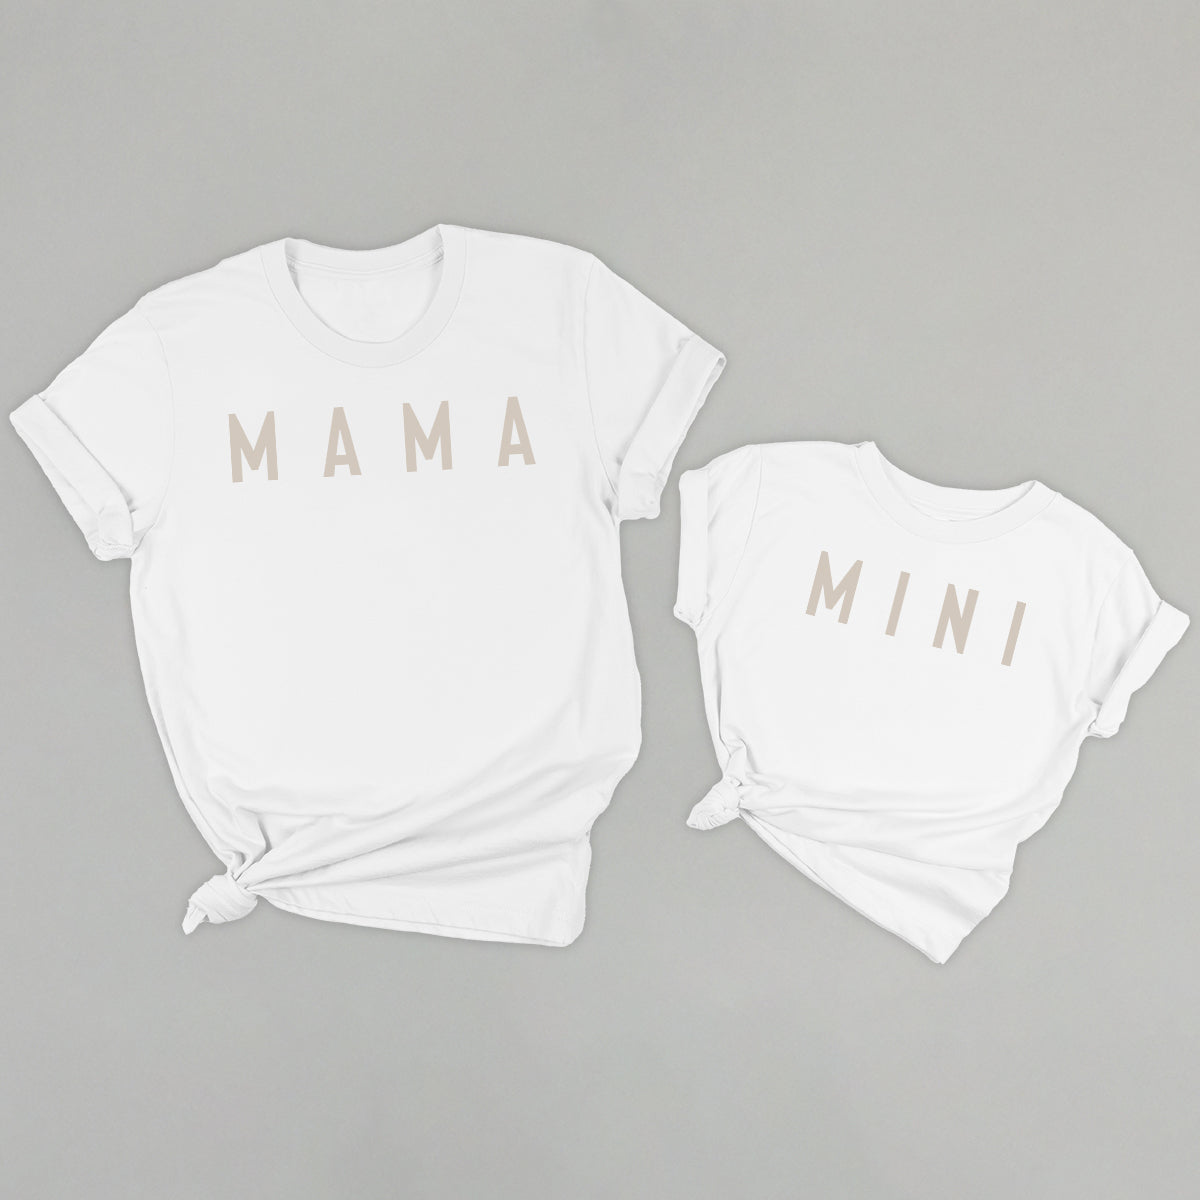 Mama and Mini (Block Lettering)